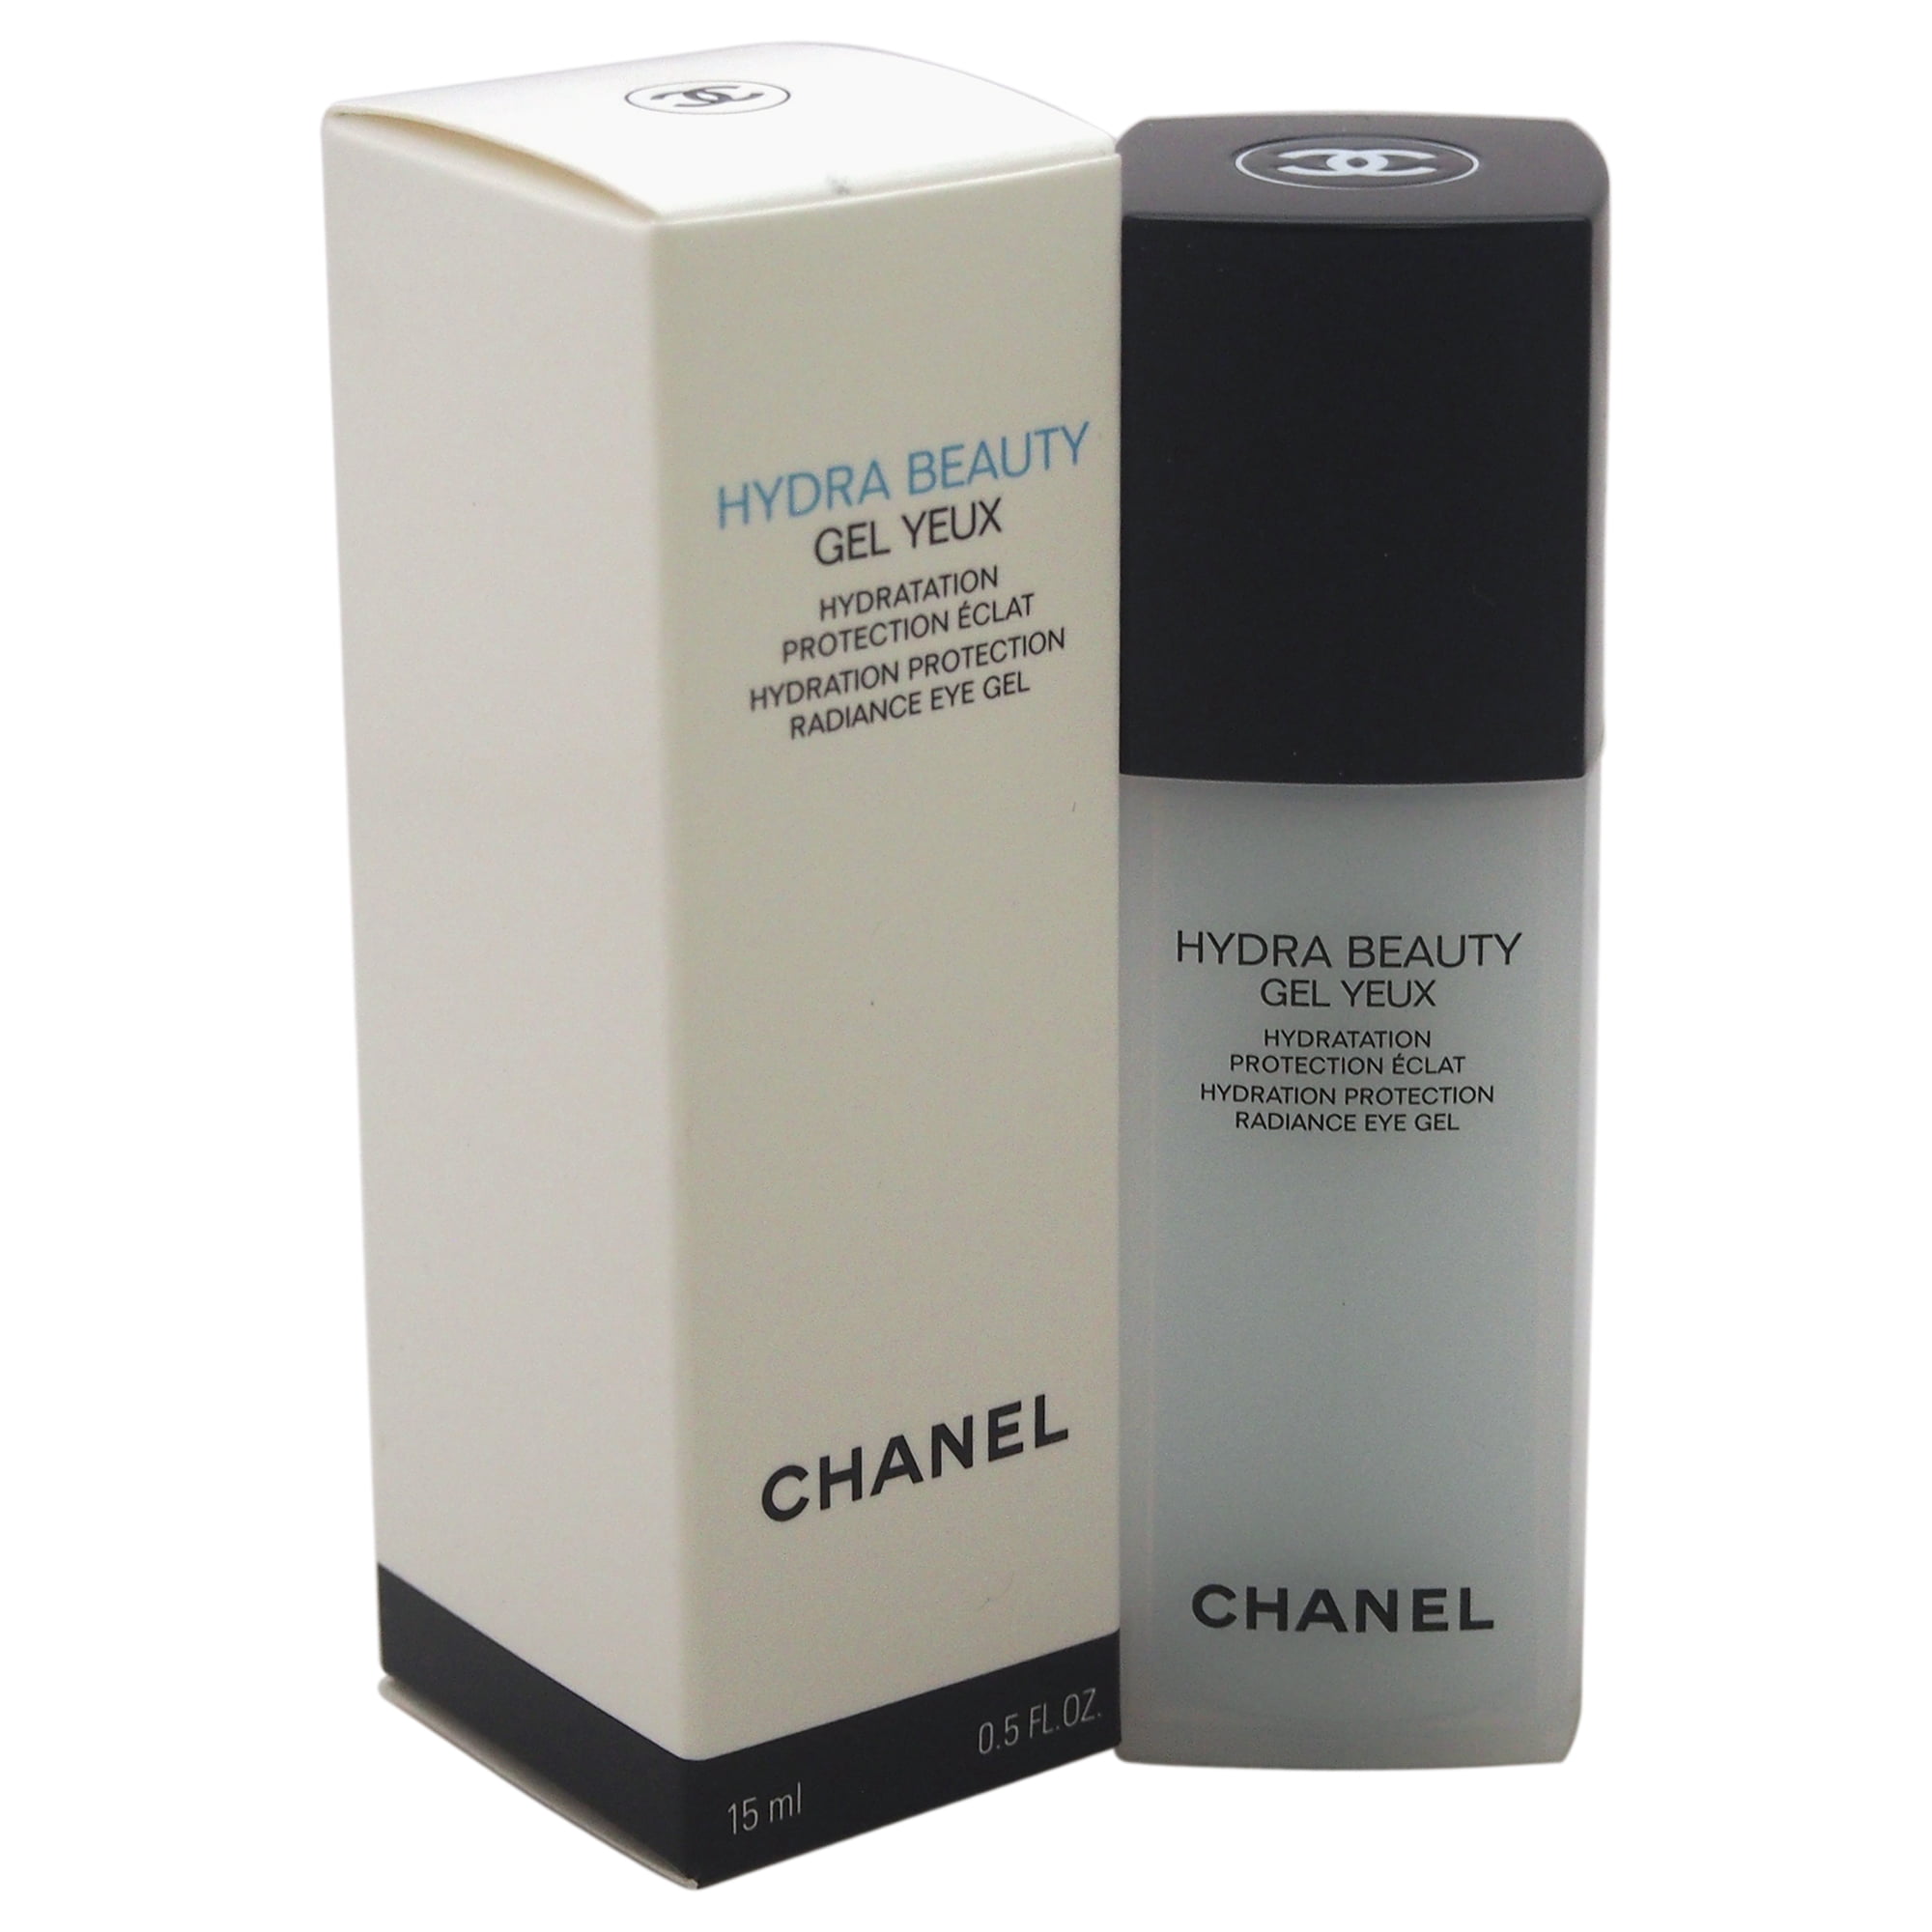 Chanel gel. Chanel hydra Beauty Gel Creme. Chanel hydra Beauty Micro Serum. Chanel hydra Beauty Gel yeux. Chanel hydra Beauty Serum.